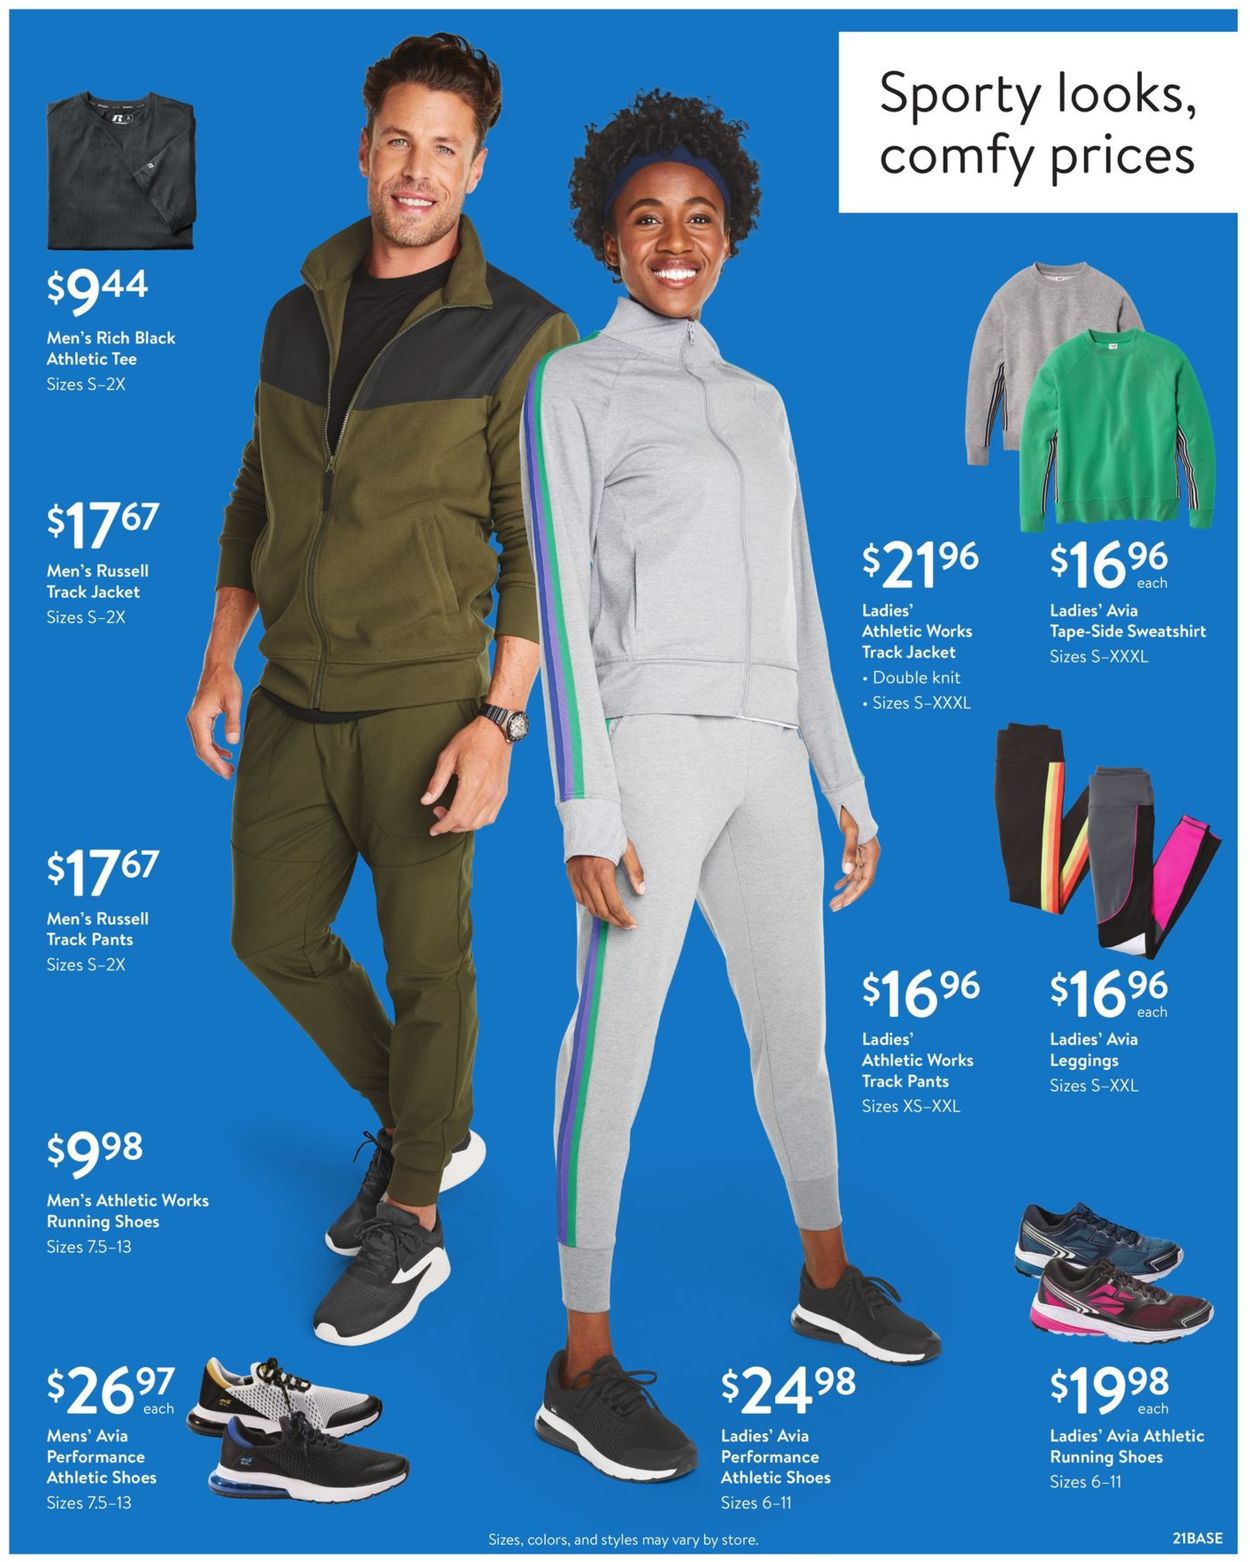 Catalogue Walmart from 12/26/2019